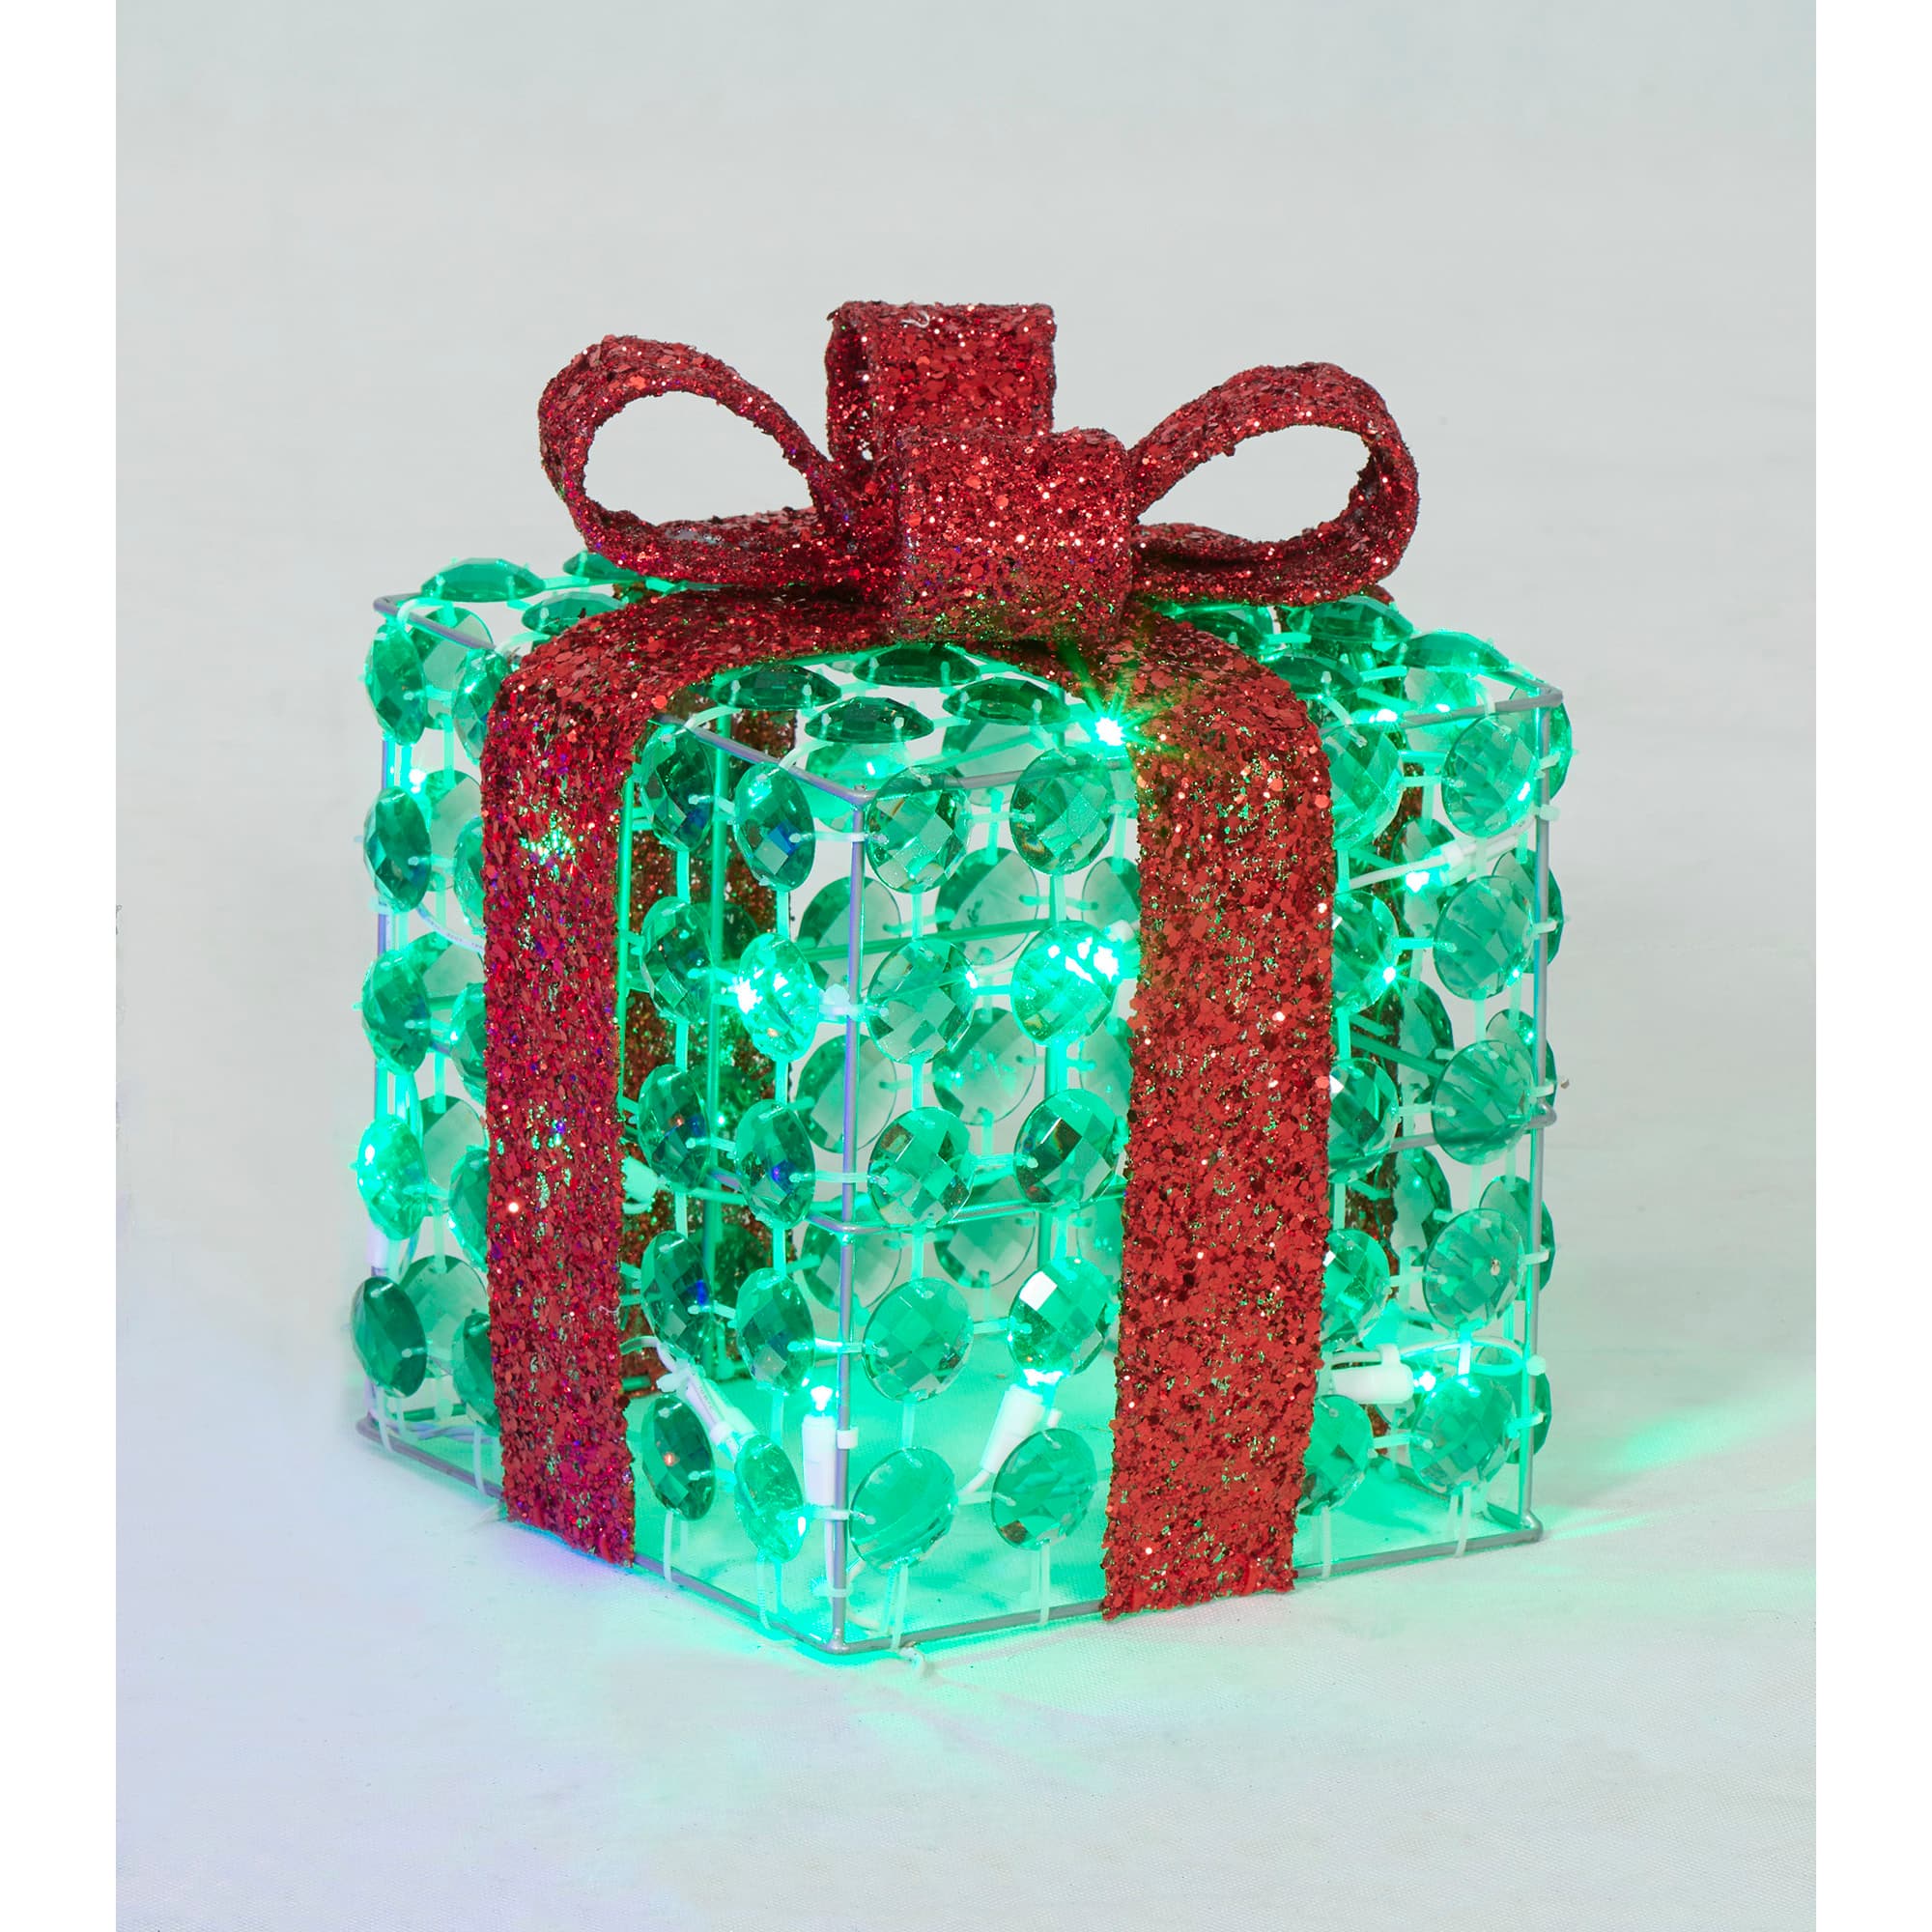 3-Piece Random Twinkle LED Diamond Beads Gift Box Sculpture Set